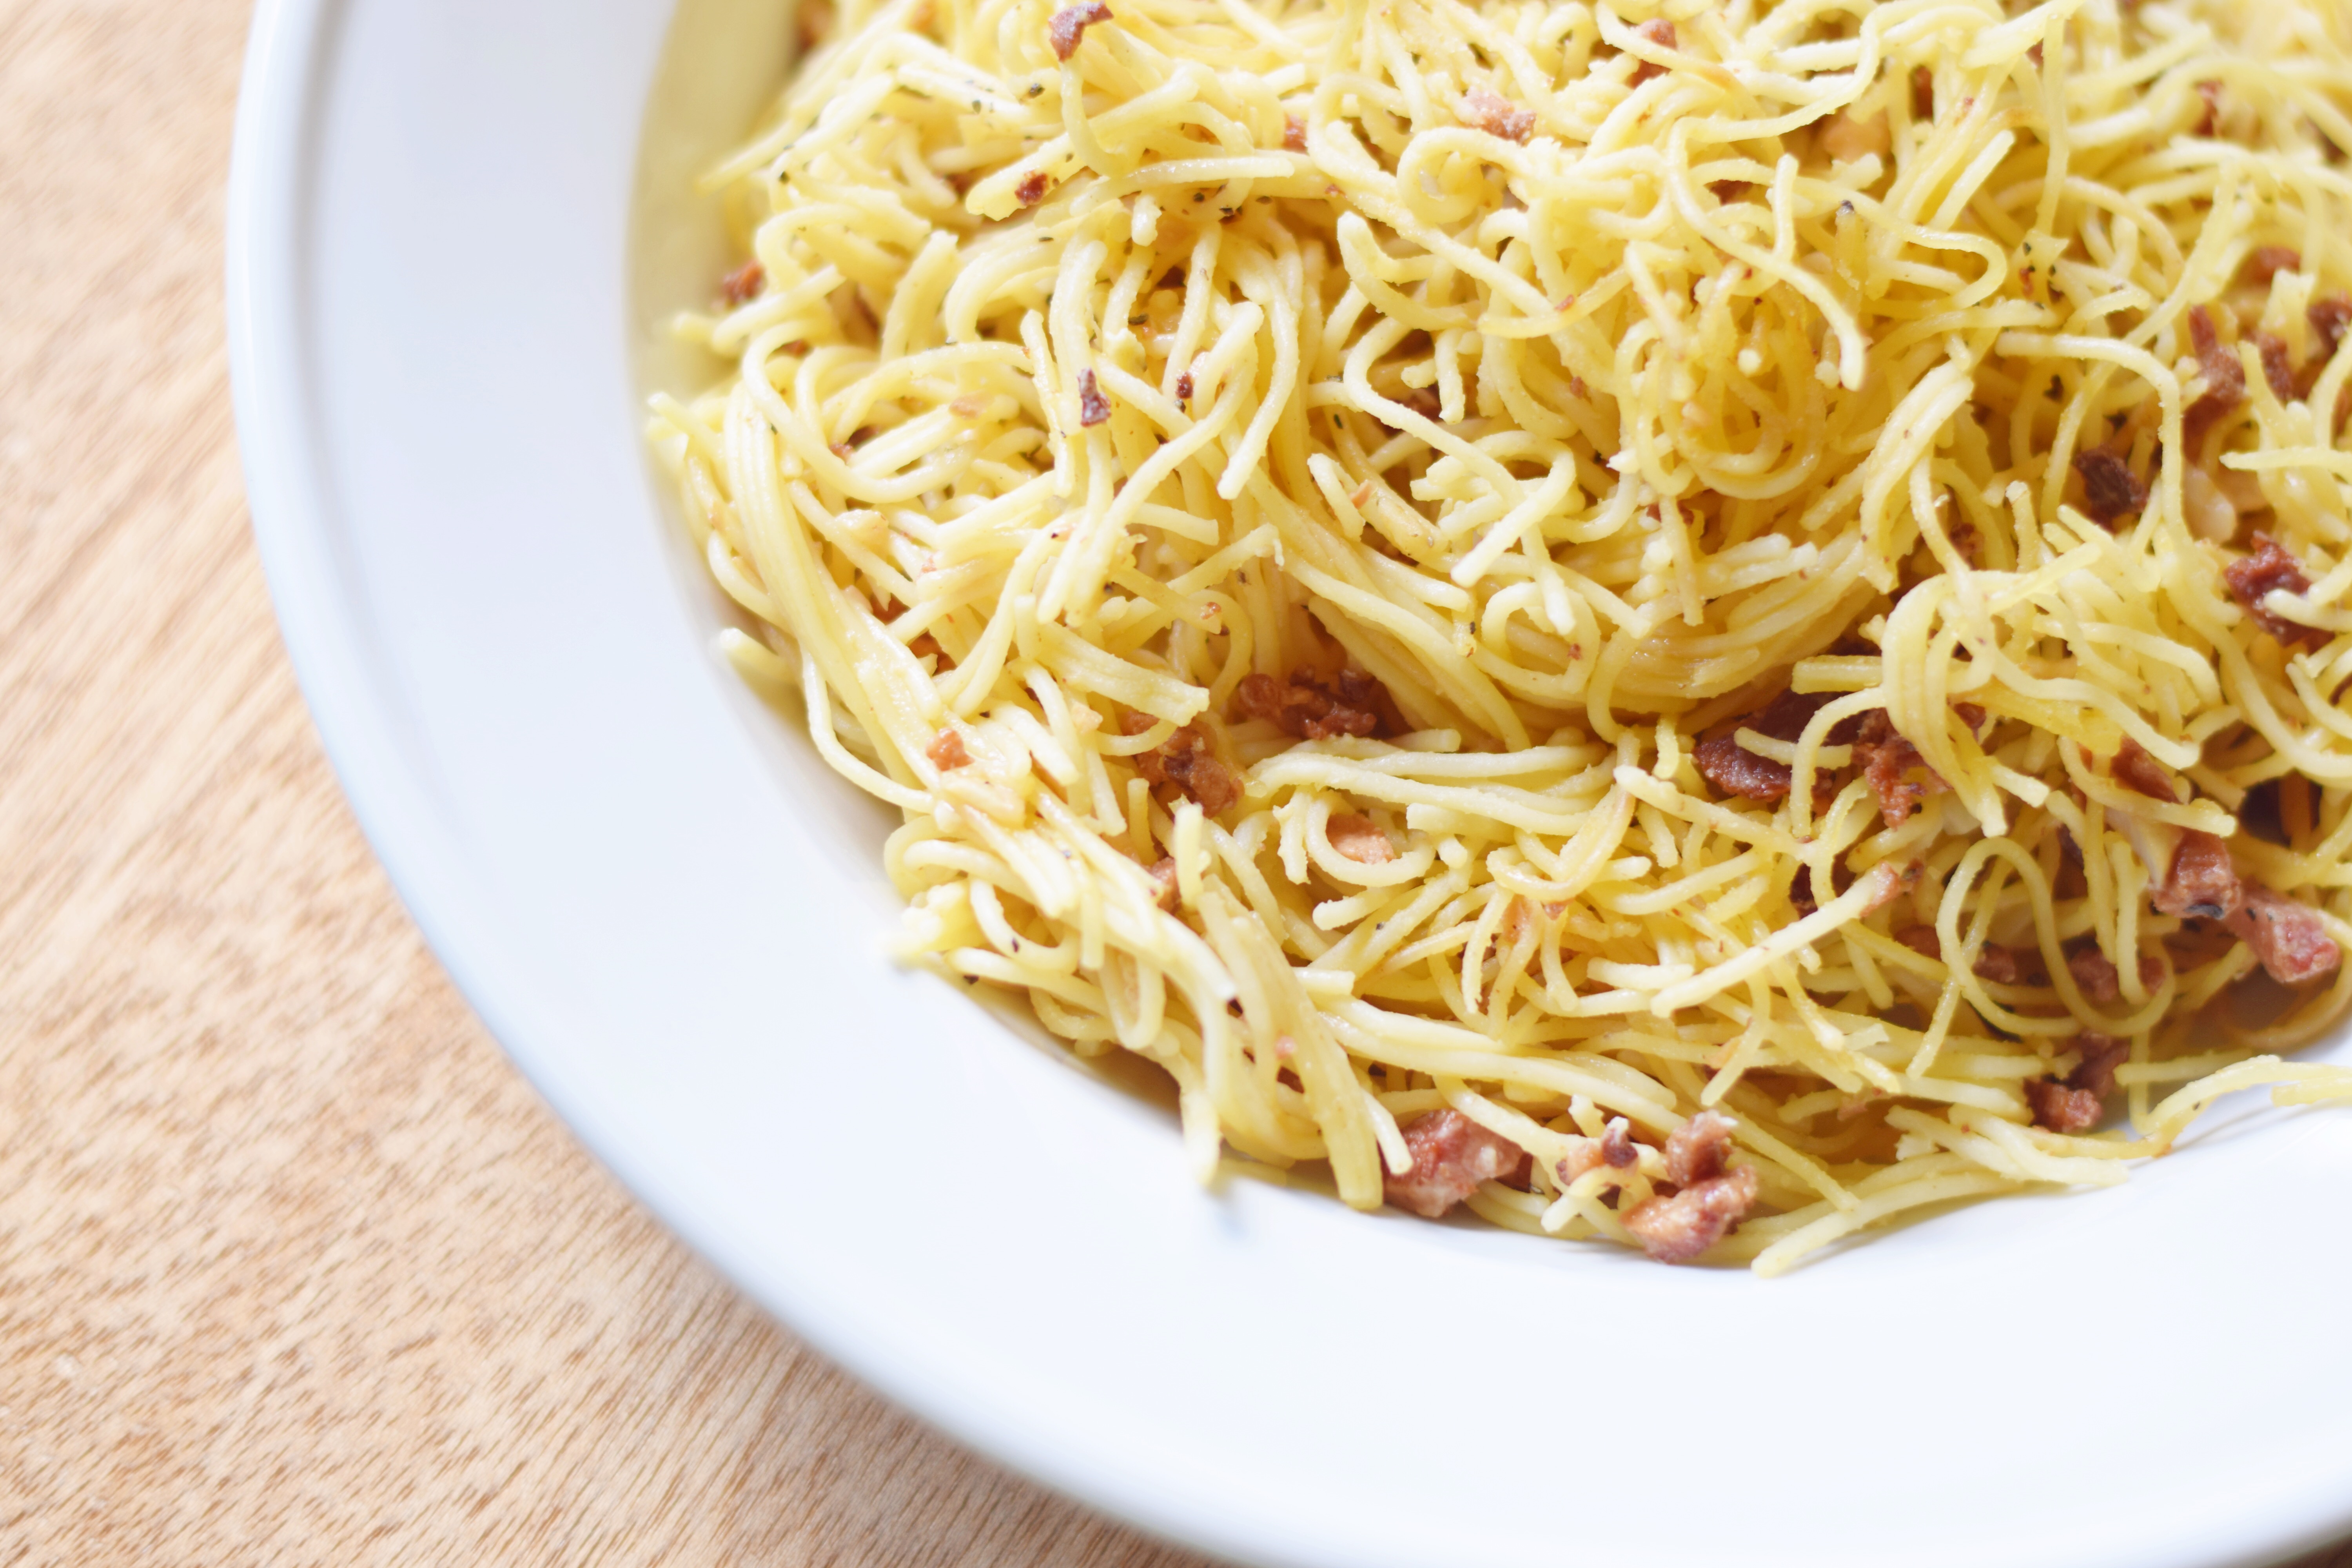 Homemade Spaghetti Carbonara - Date Night In Meal Ideas - Authentic Pasta Carbonara Recipe - Easy Spaghetti Carbonara - Easy Dinner Recipe - Communikait by Kait Hanson